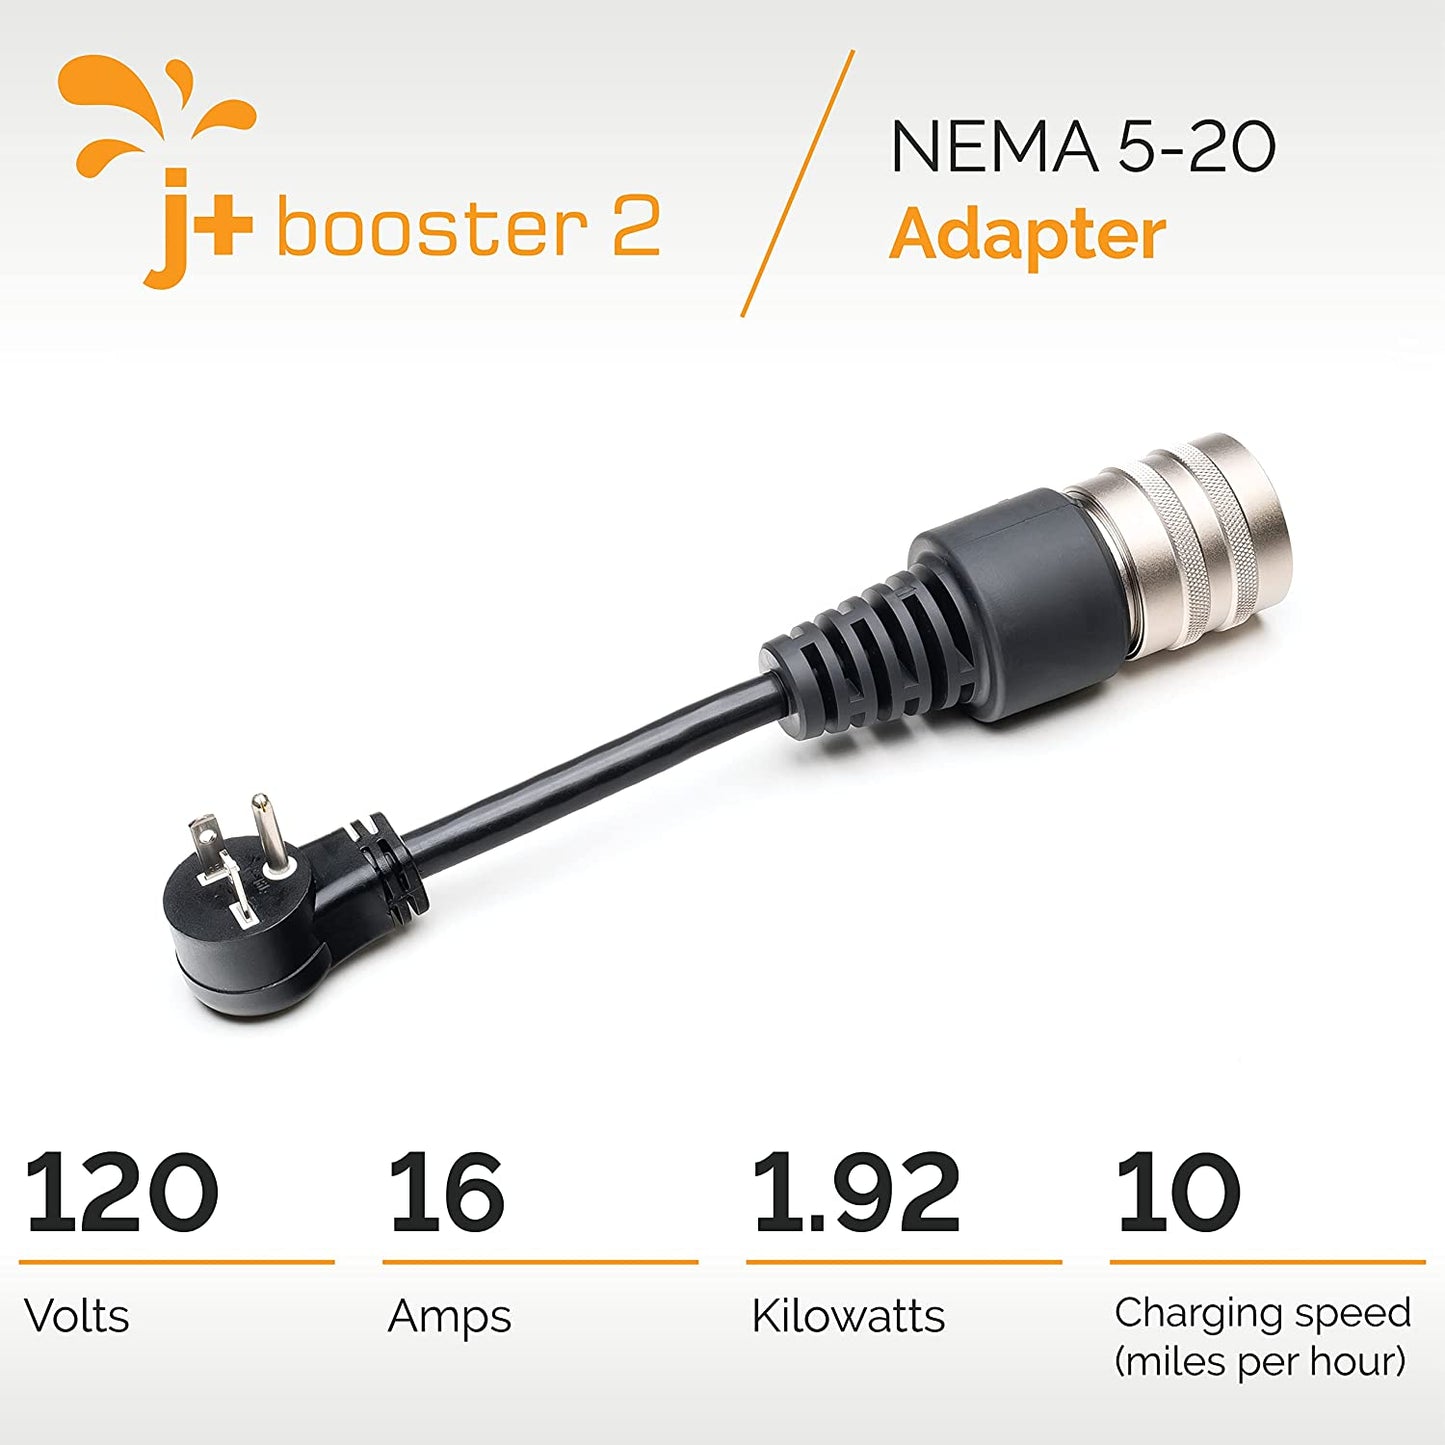 NEMA 5-20 Adapter